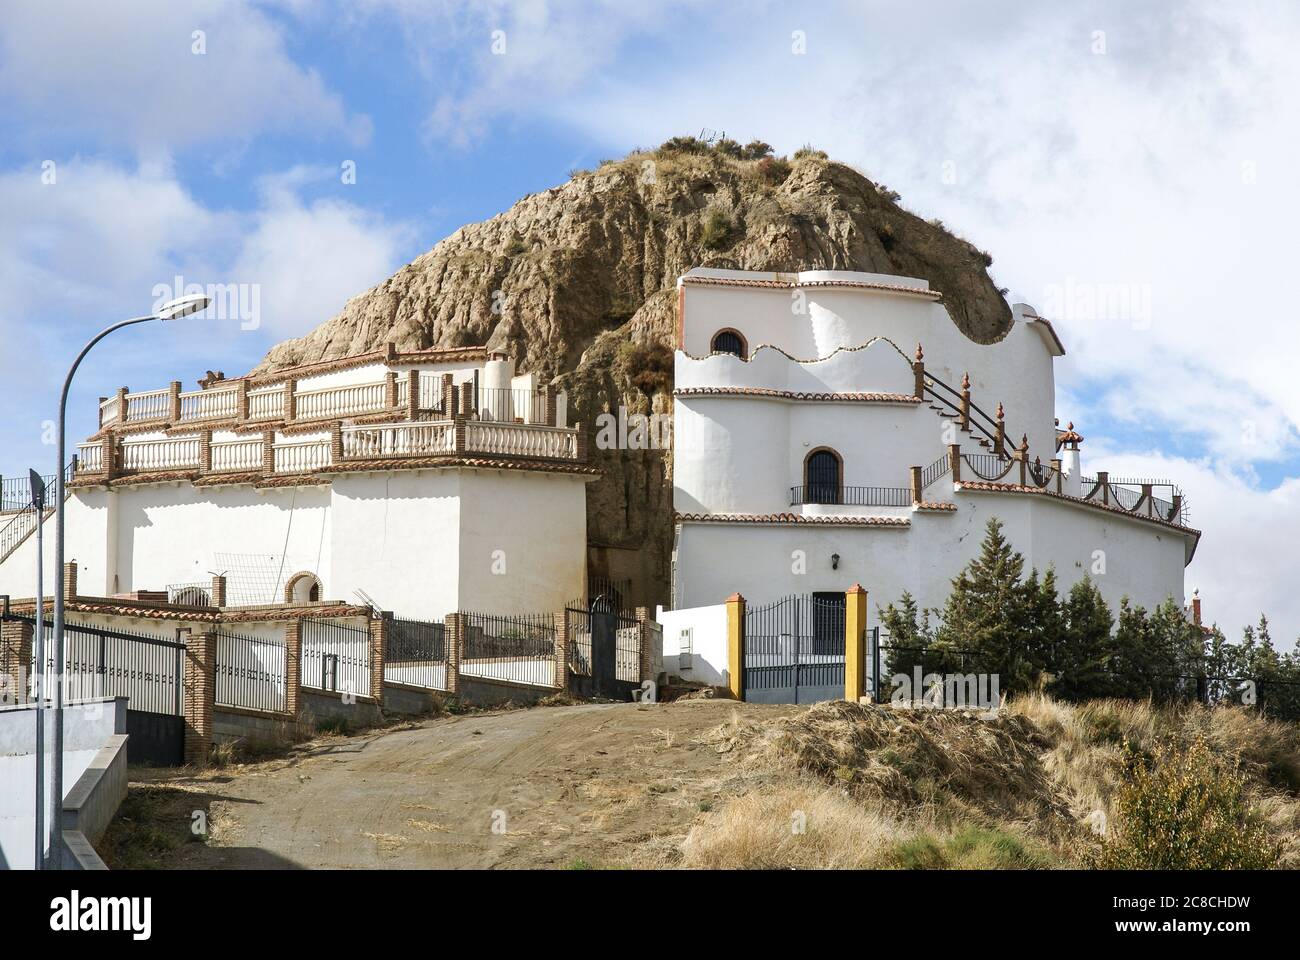 Troglodyte cave dwellings, Guadix, Spain Stock Photo